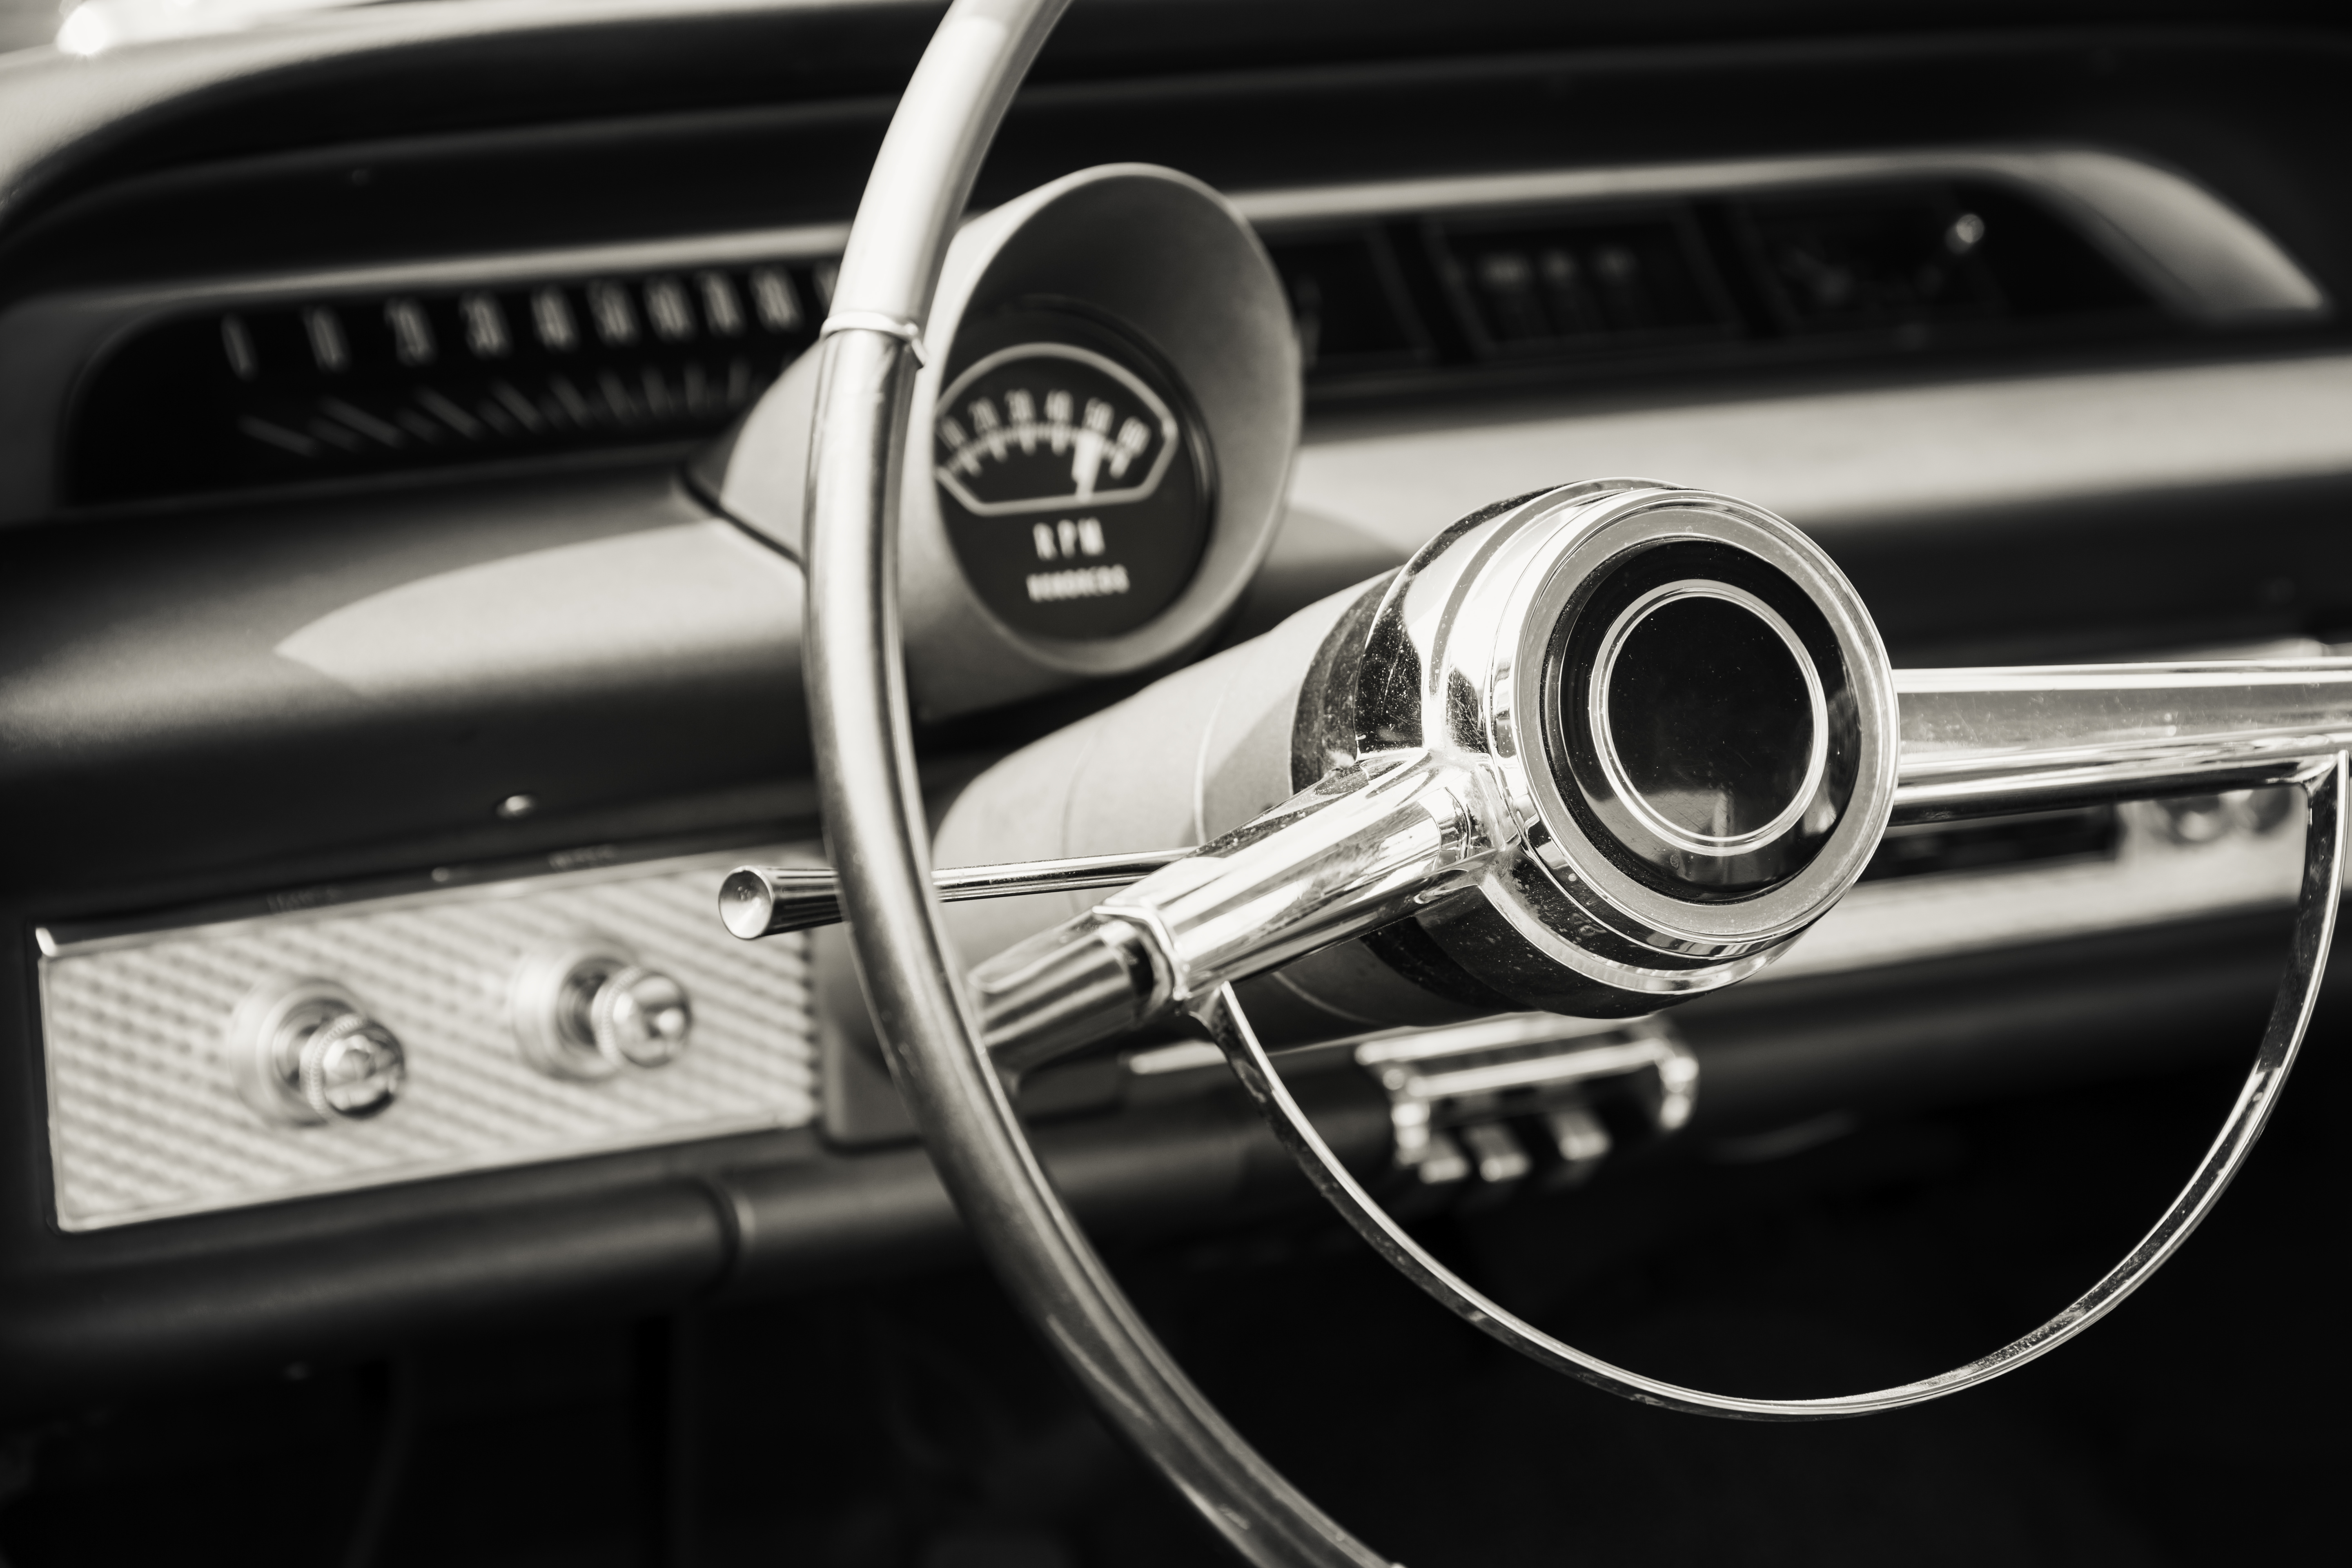 Classic car interior black and white.